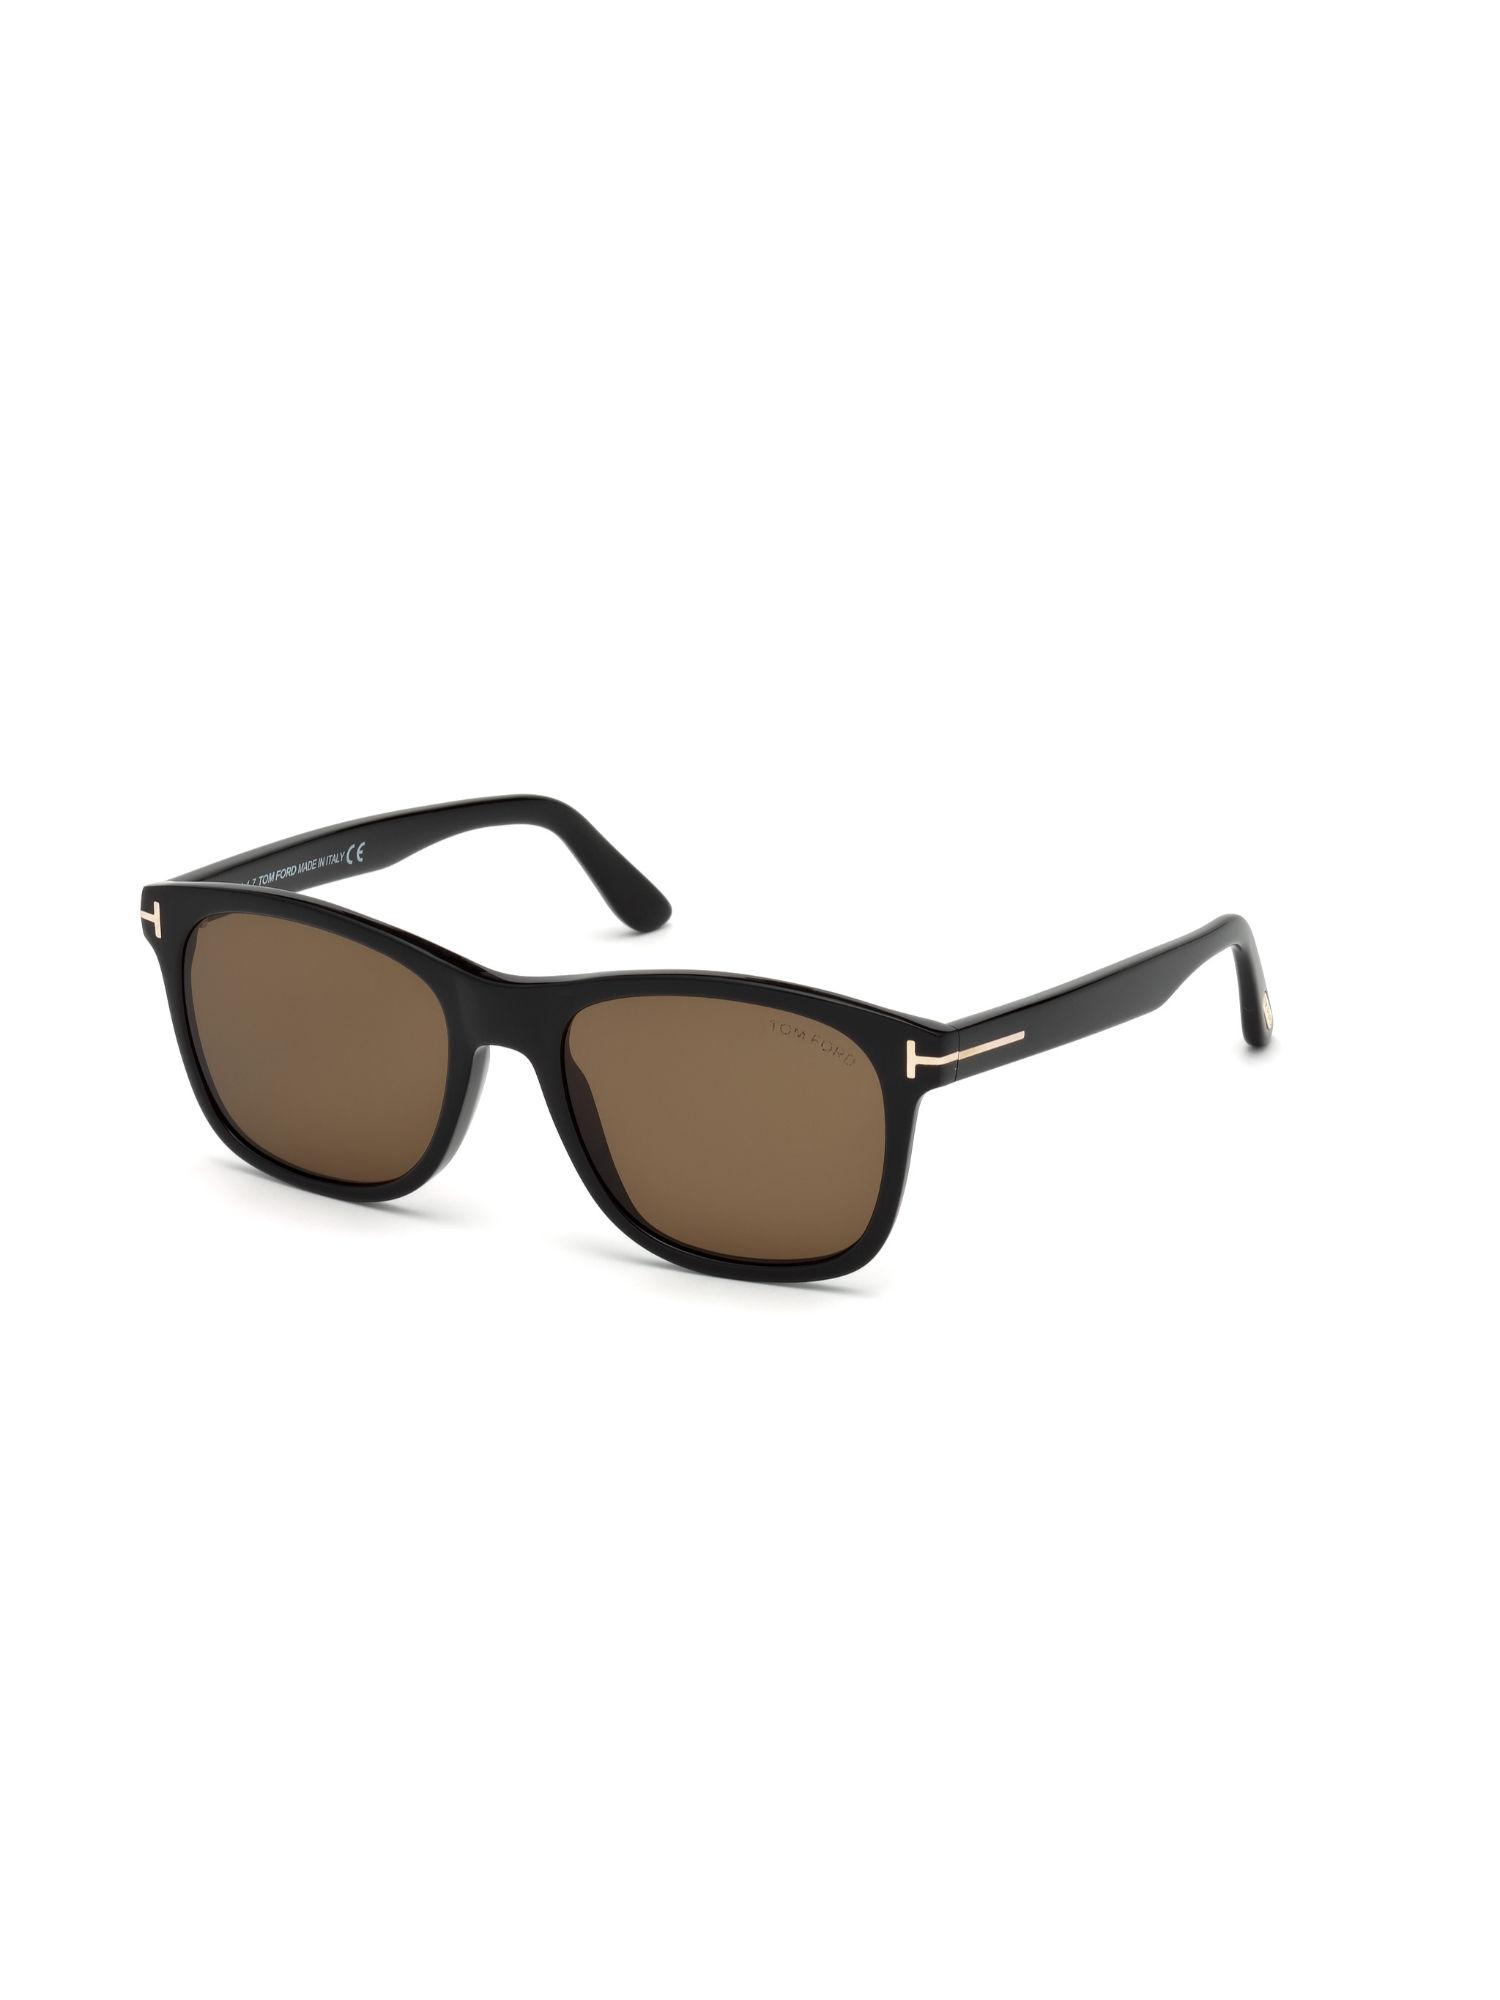 Tom Ford FT0595 Square UV Protected Sunglasses for Men Brown (55)